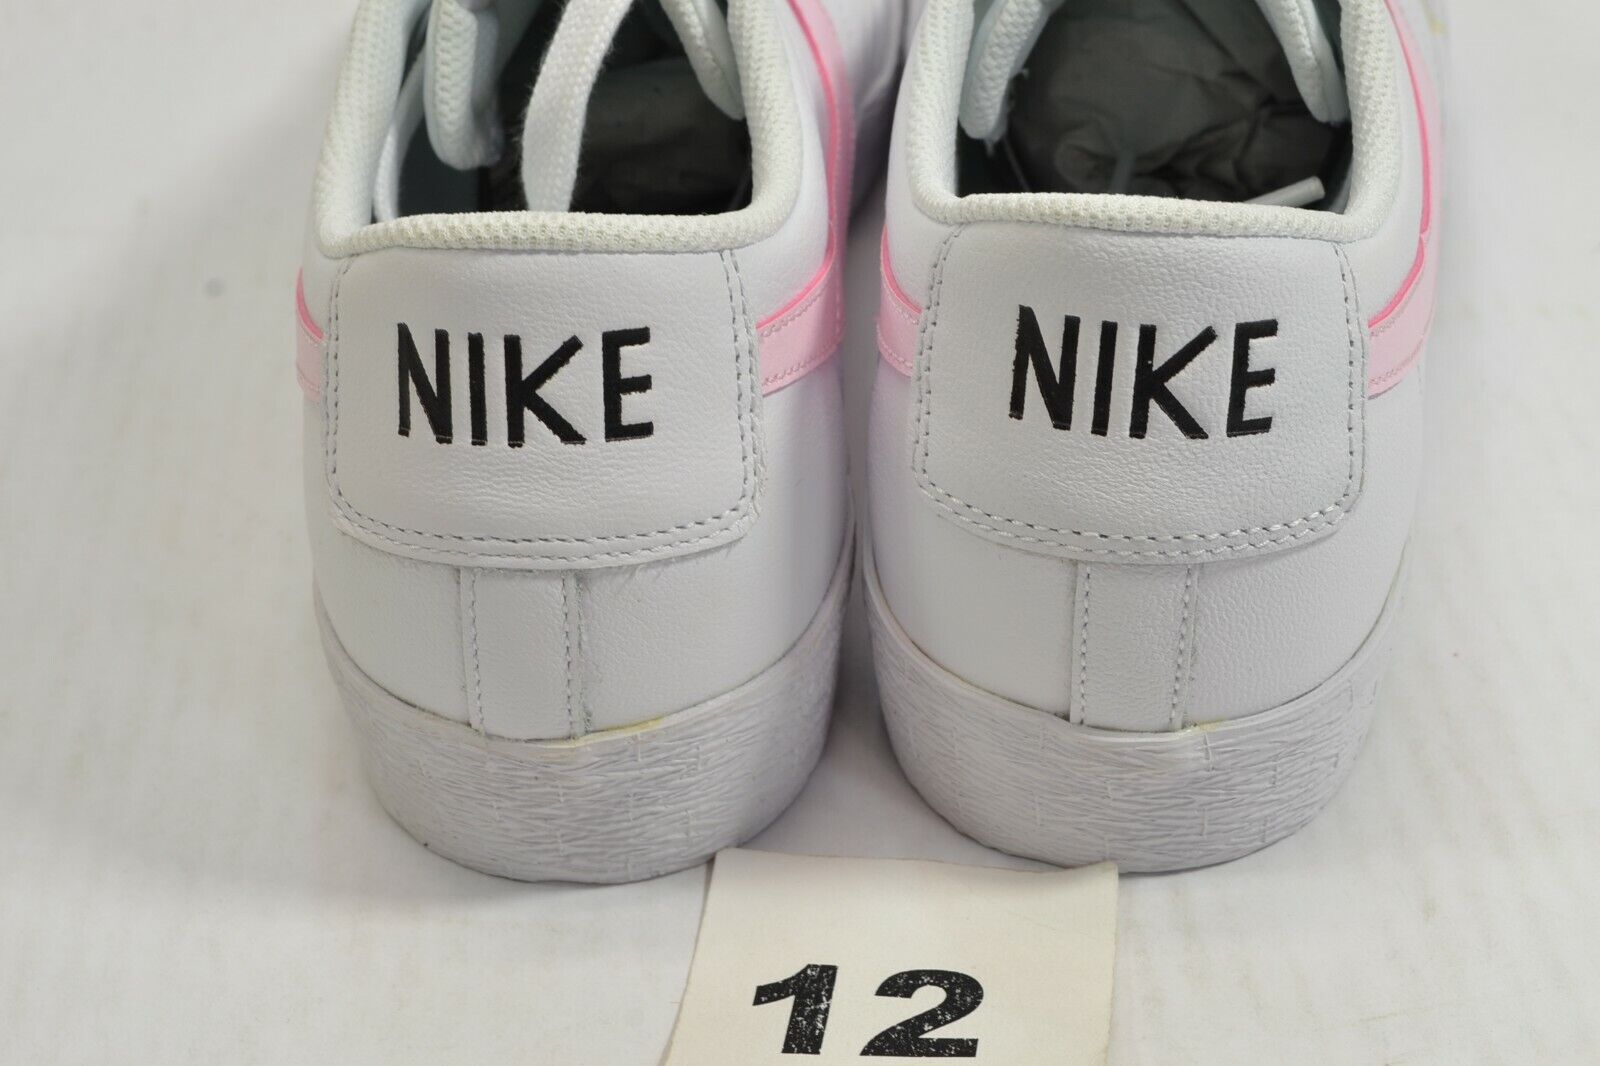 NIke SB BLAZER ZOOM LOW XT Prism Pink Black Discounted (661) Men's Shoes | eBay